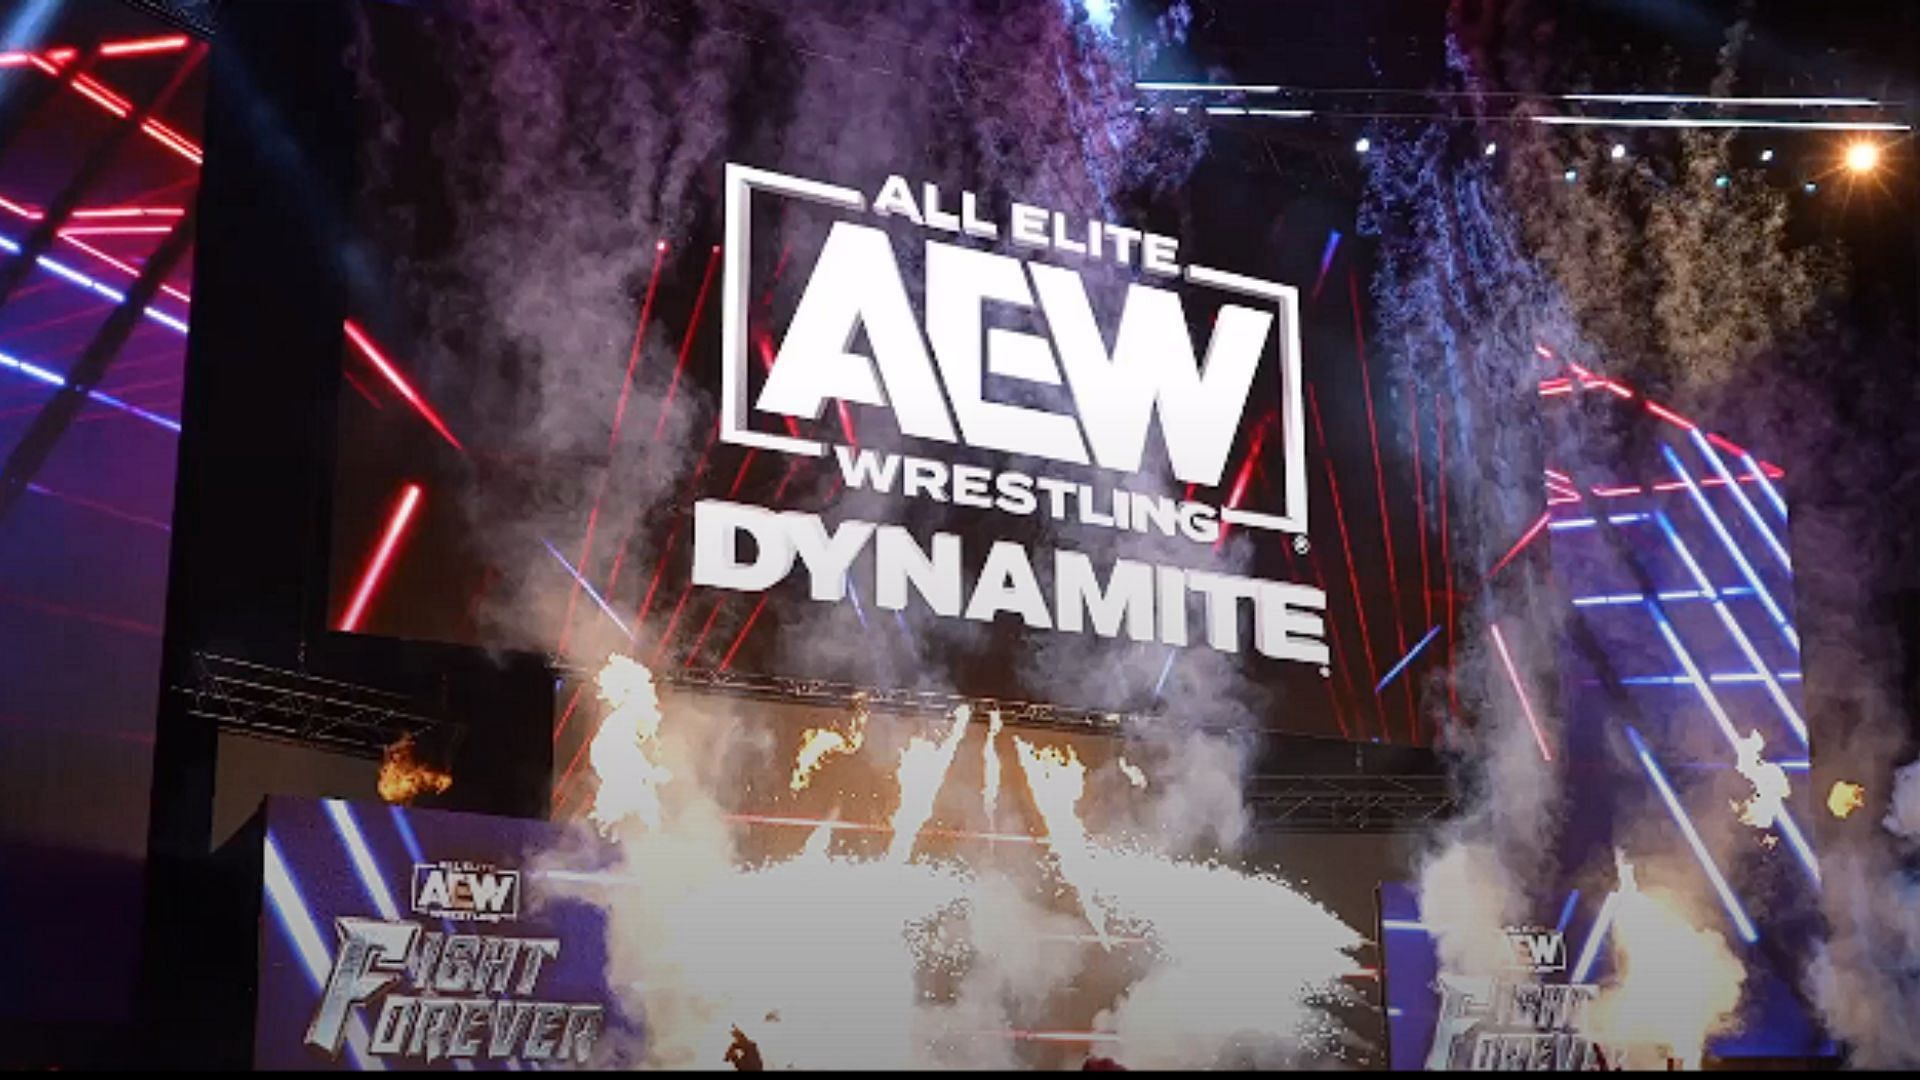 All Elite Wrestling is a Jacksonville-based promotion led by Tony Khan